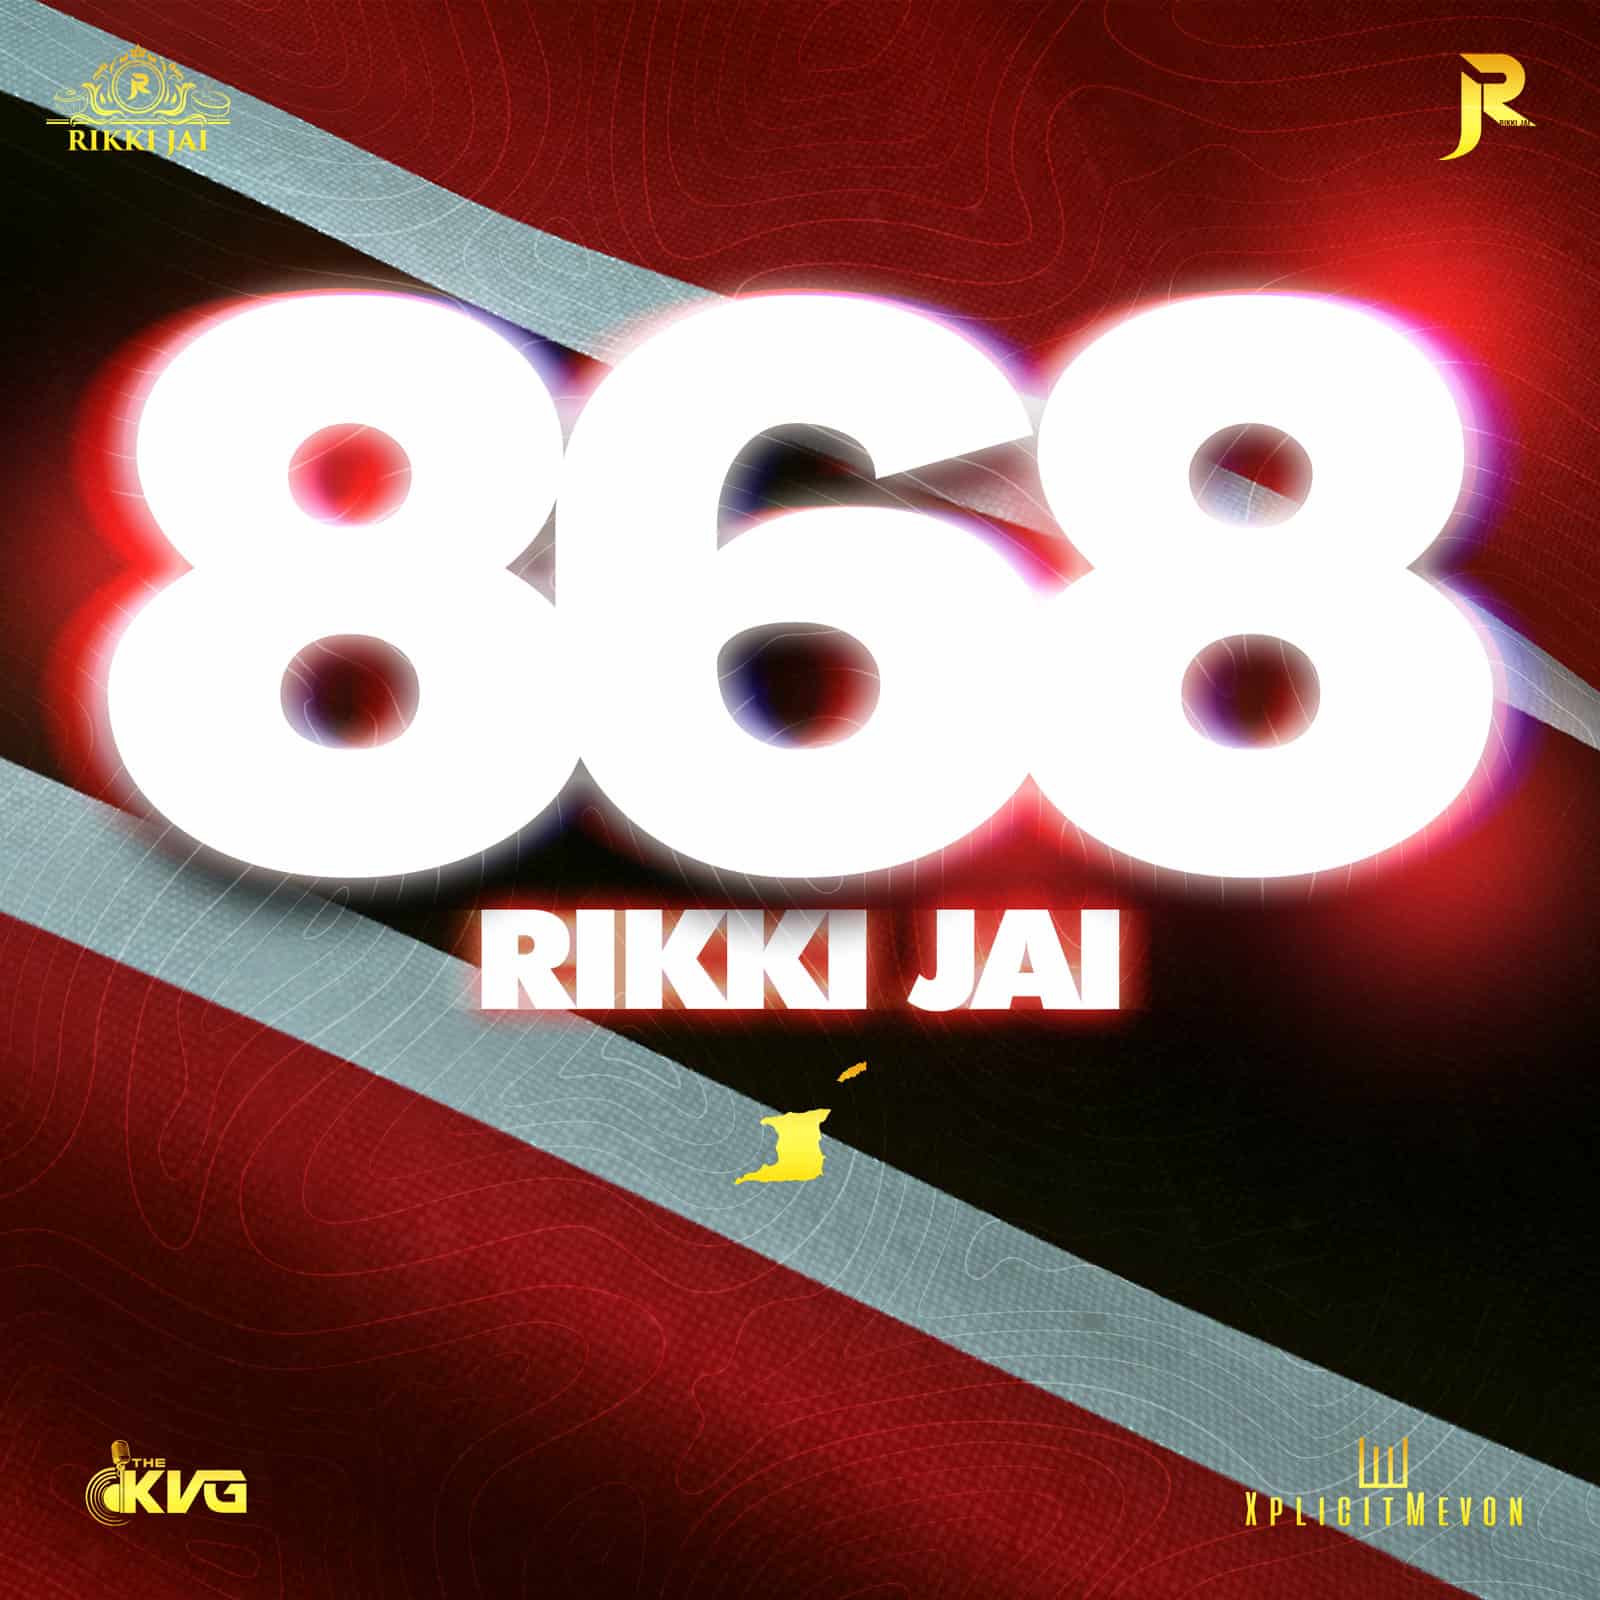 Rikki Jai, The KVG & XplicitMevon - 868